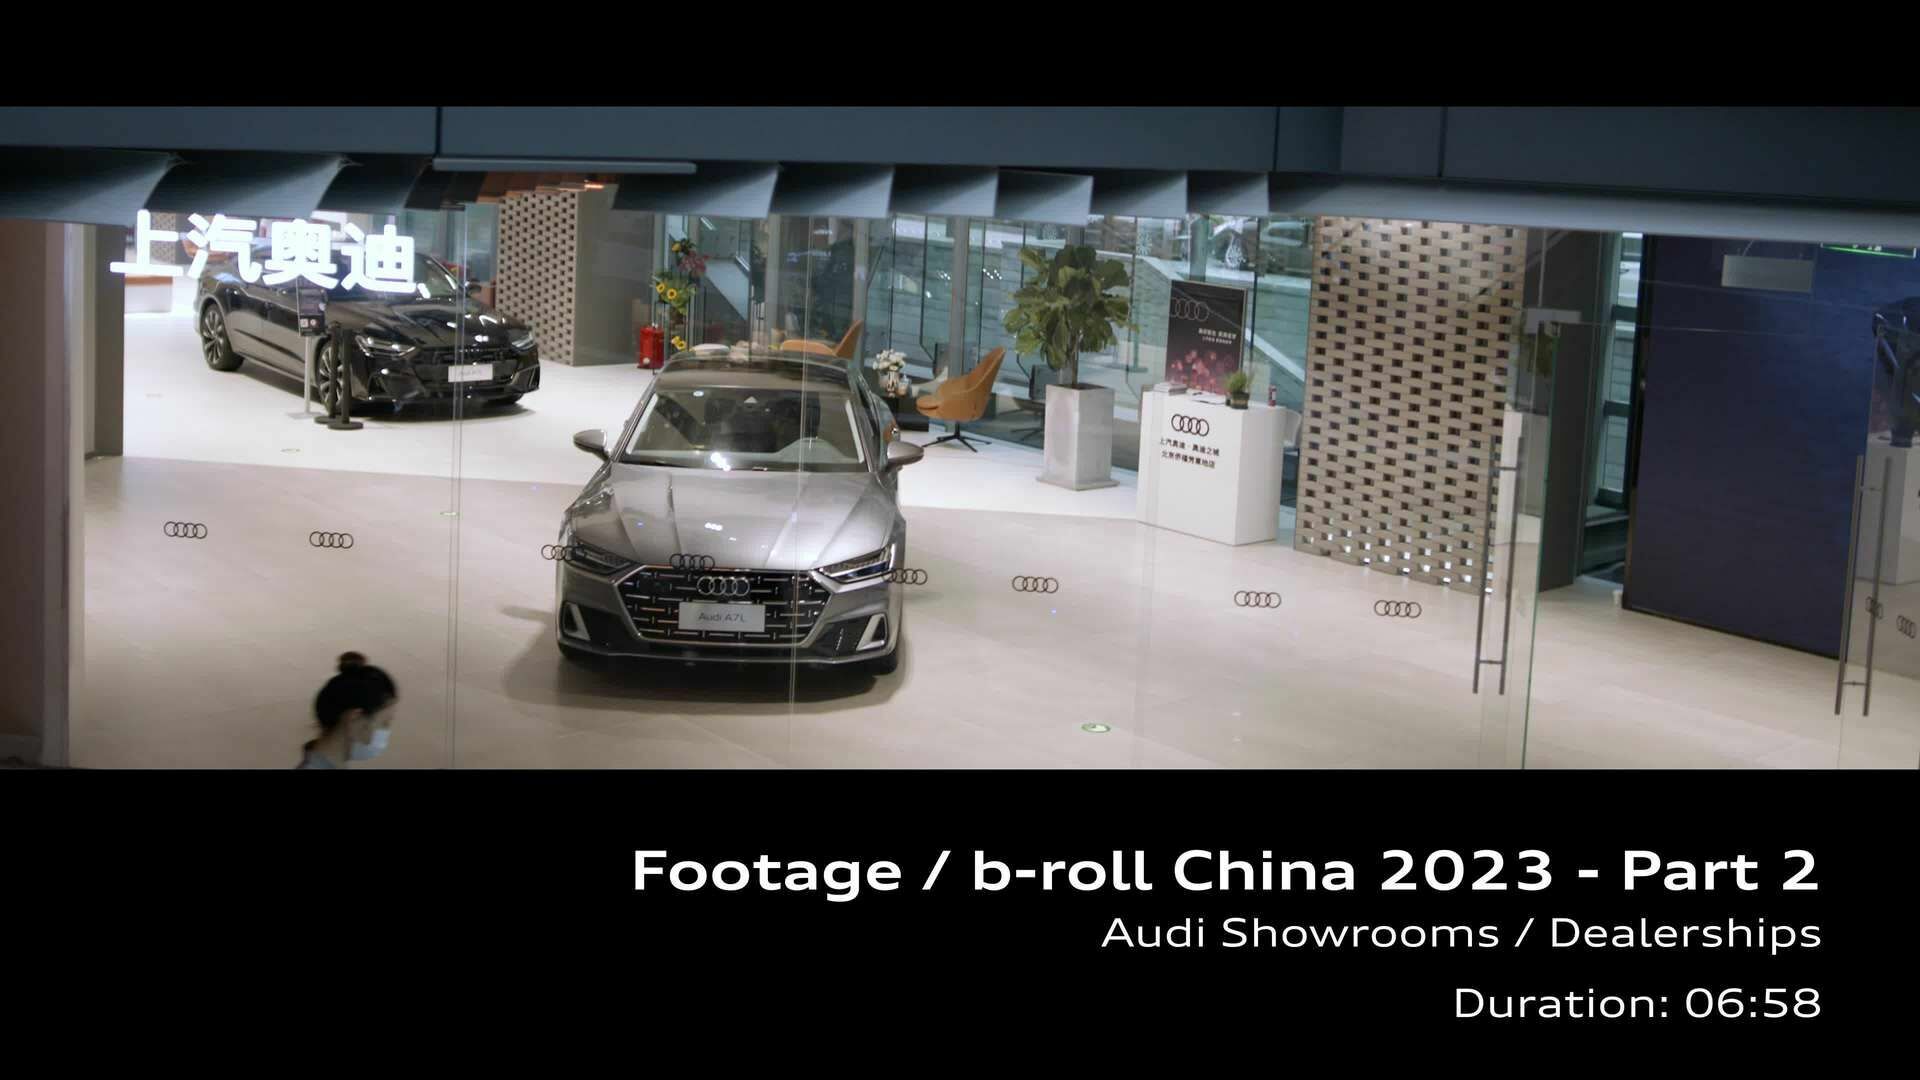 Footage: Auto Shanghai 2023 - Showrooms & Dealerships